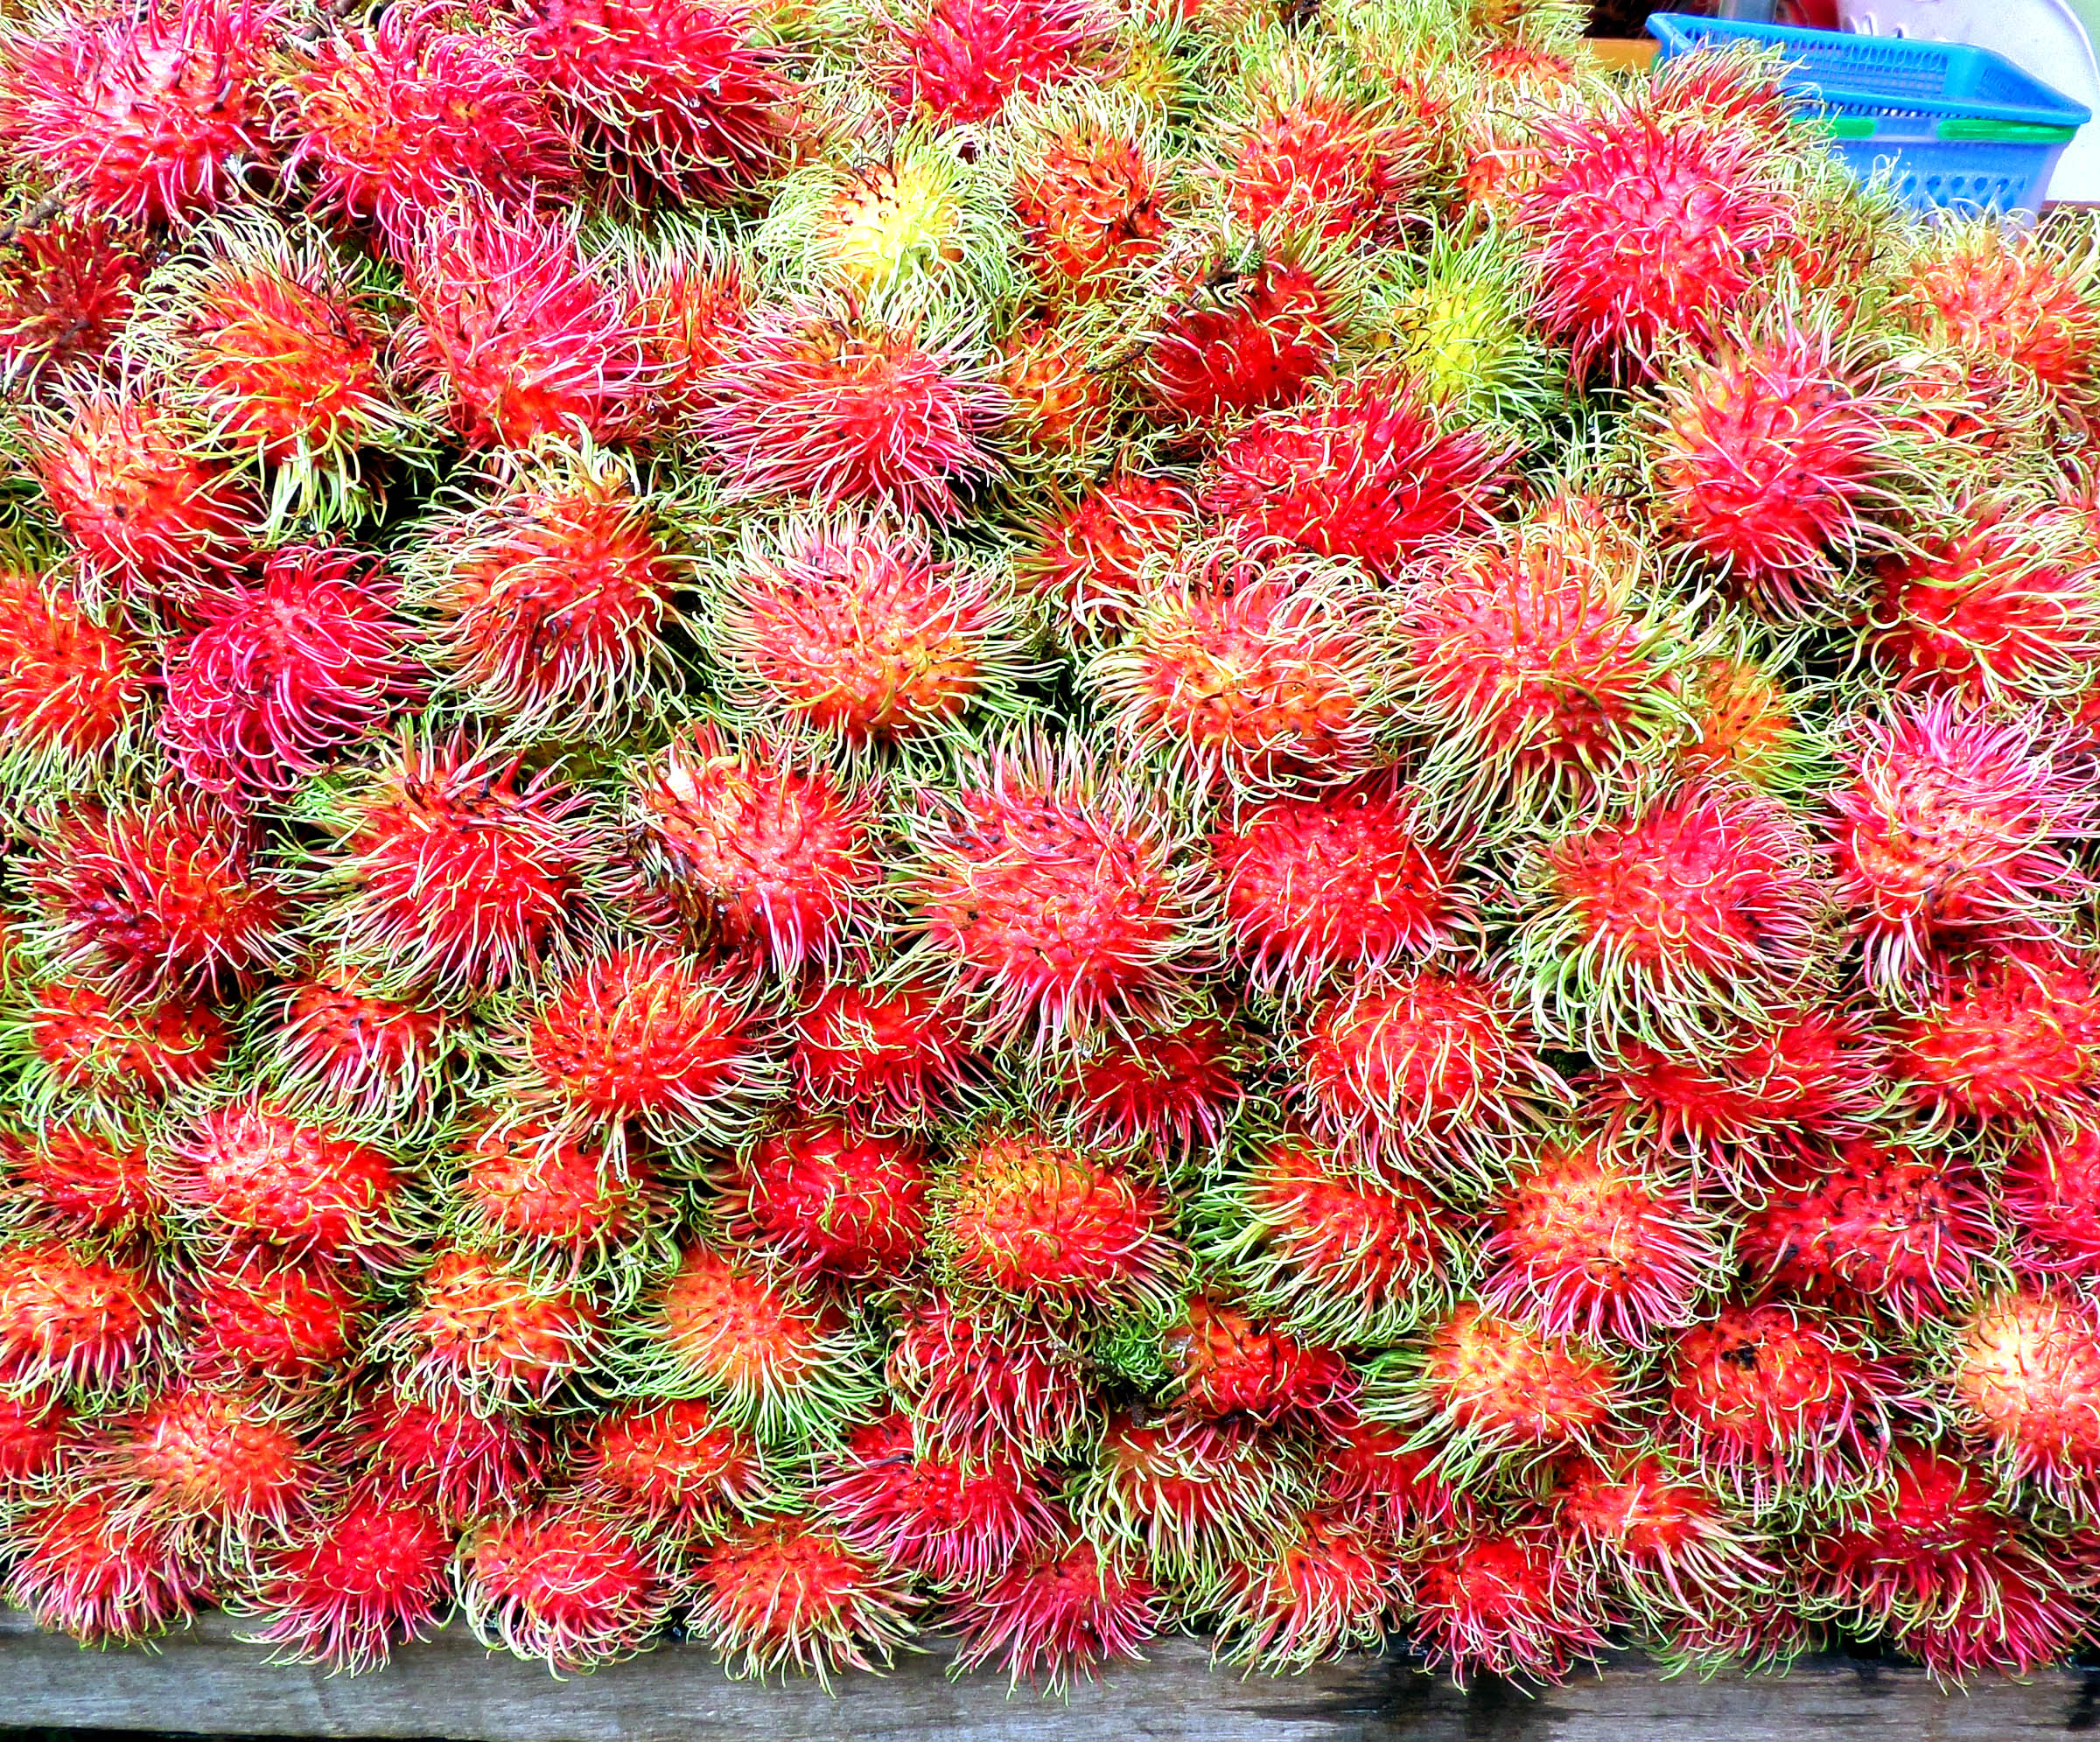 Rambutan fruit photo